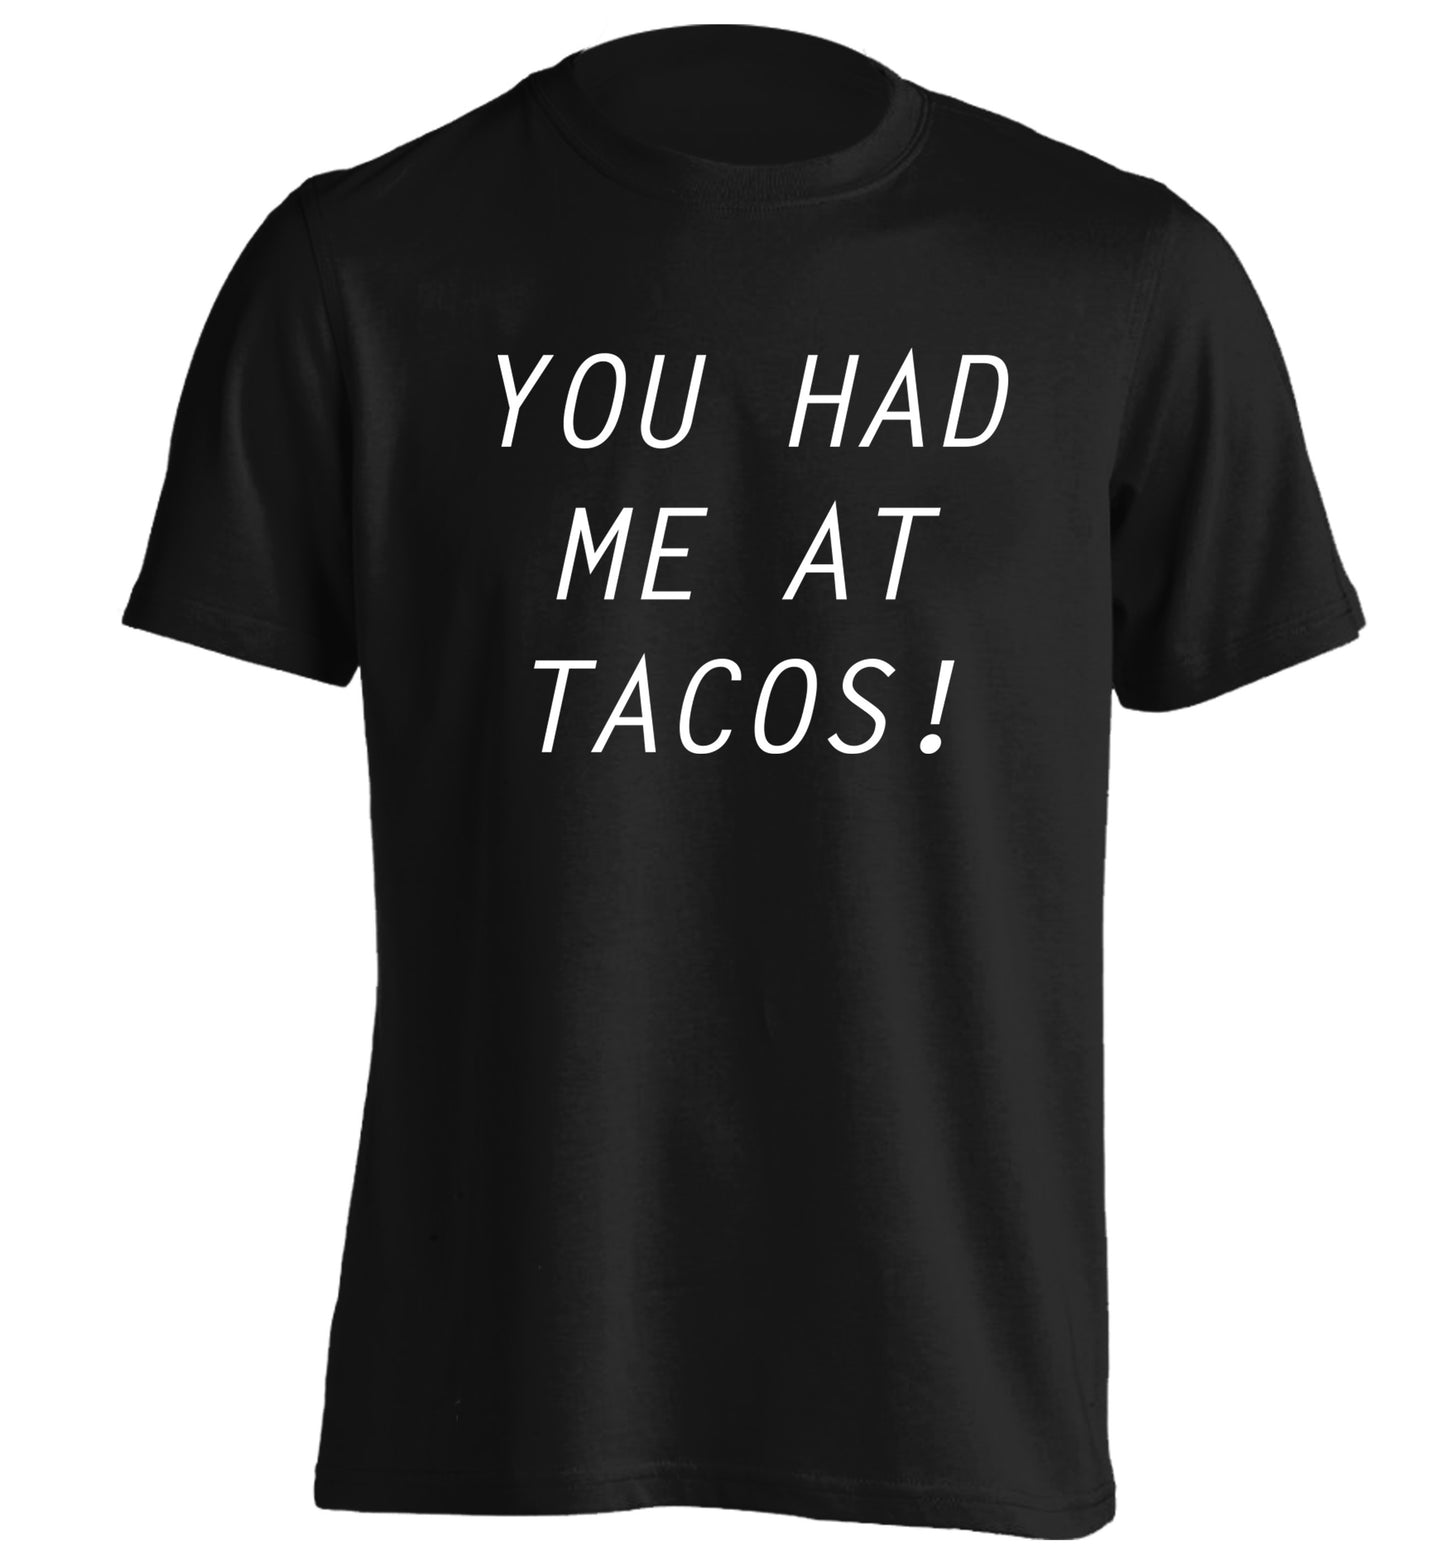 You had me at tacos adults unisex black Tshirt 2XL